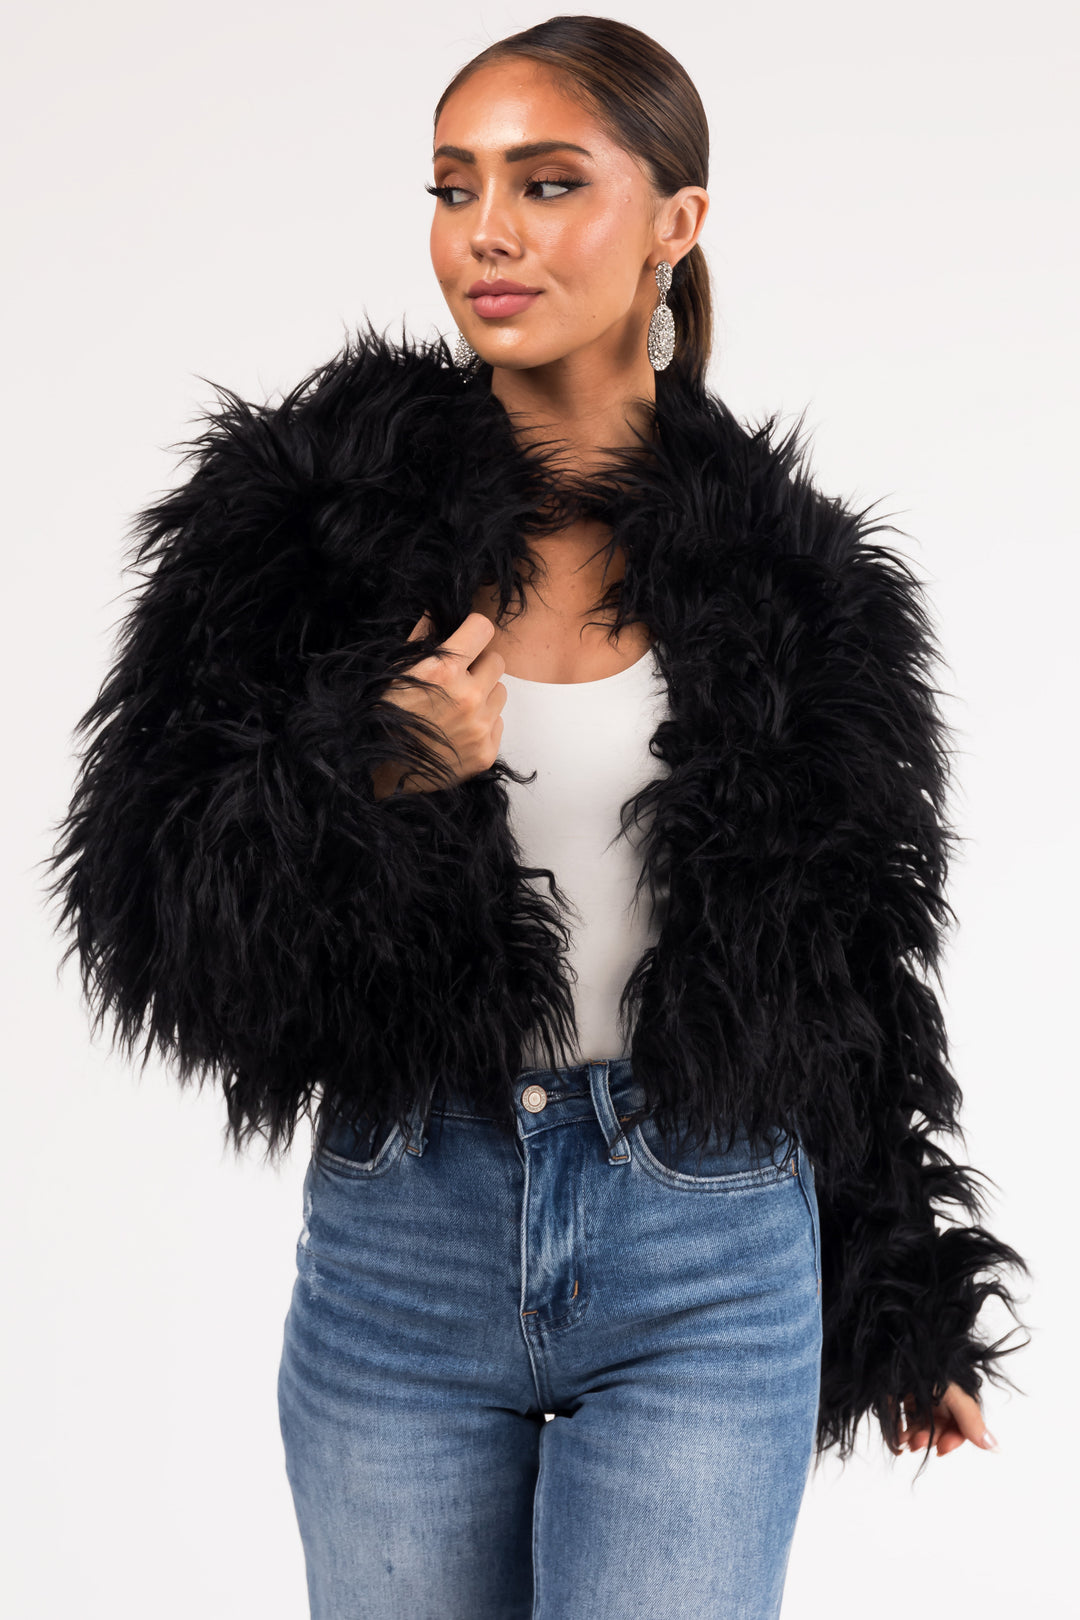 Buy Black Faux Fur Jacket 18, Coats